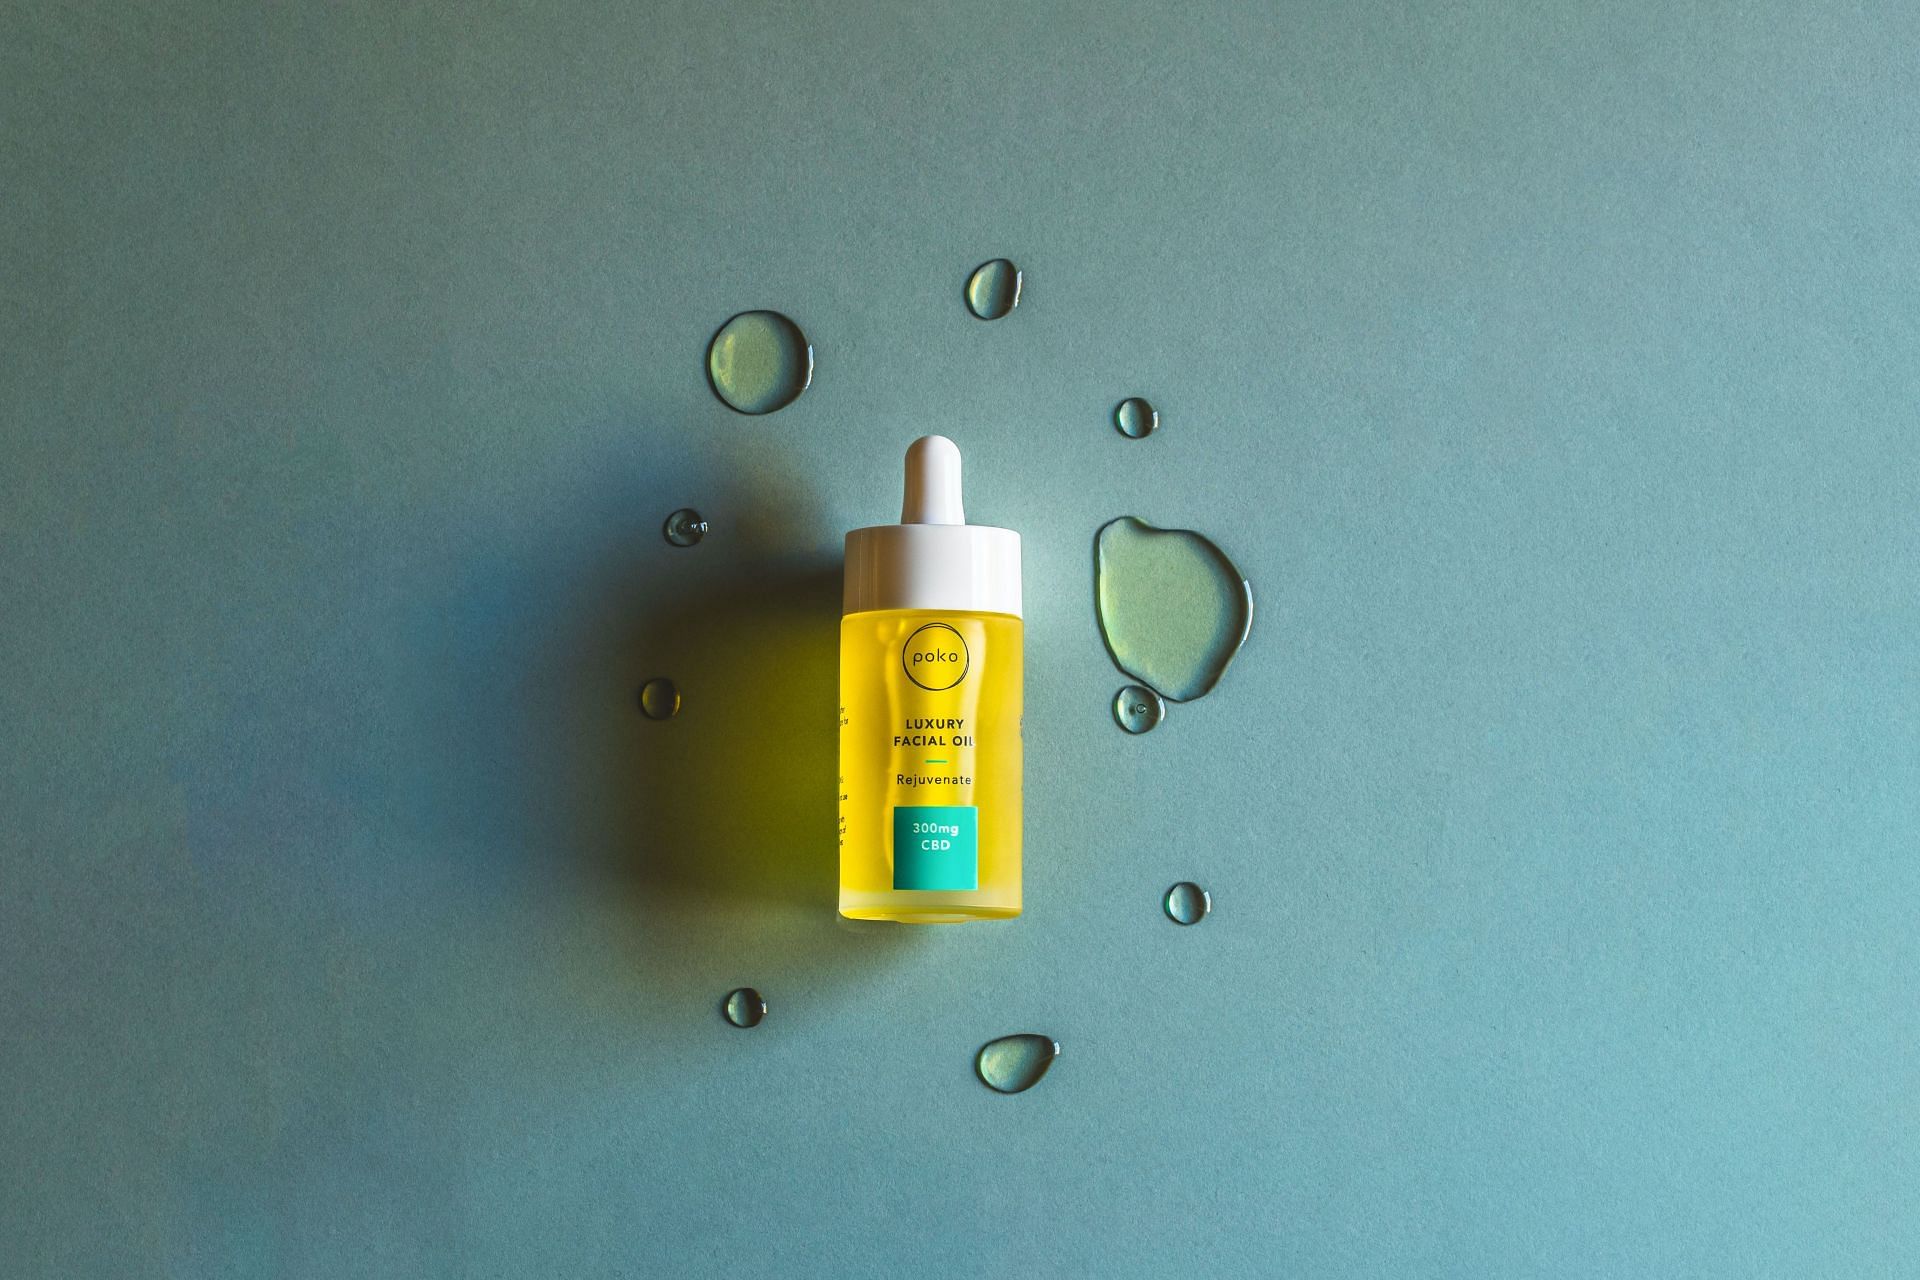 Is baby oil good for your skin? (Image via Unsplash / Poko Skincare)